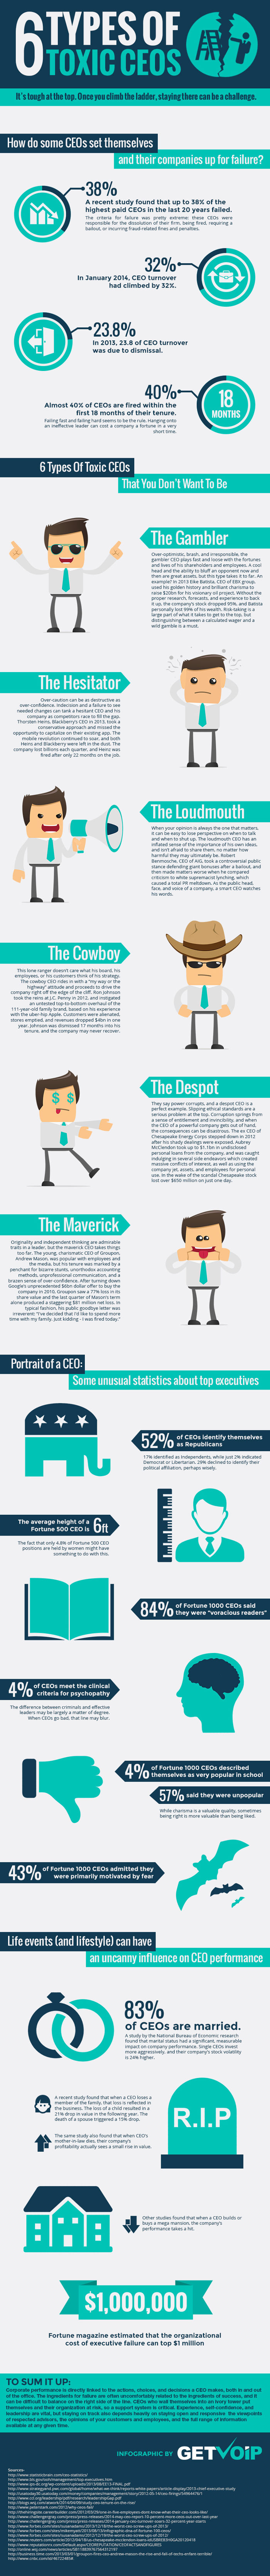 Types of Toxic CEOs infographic